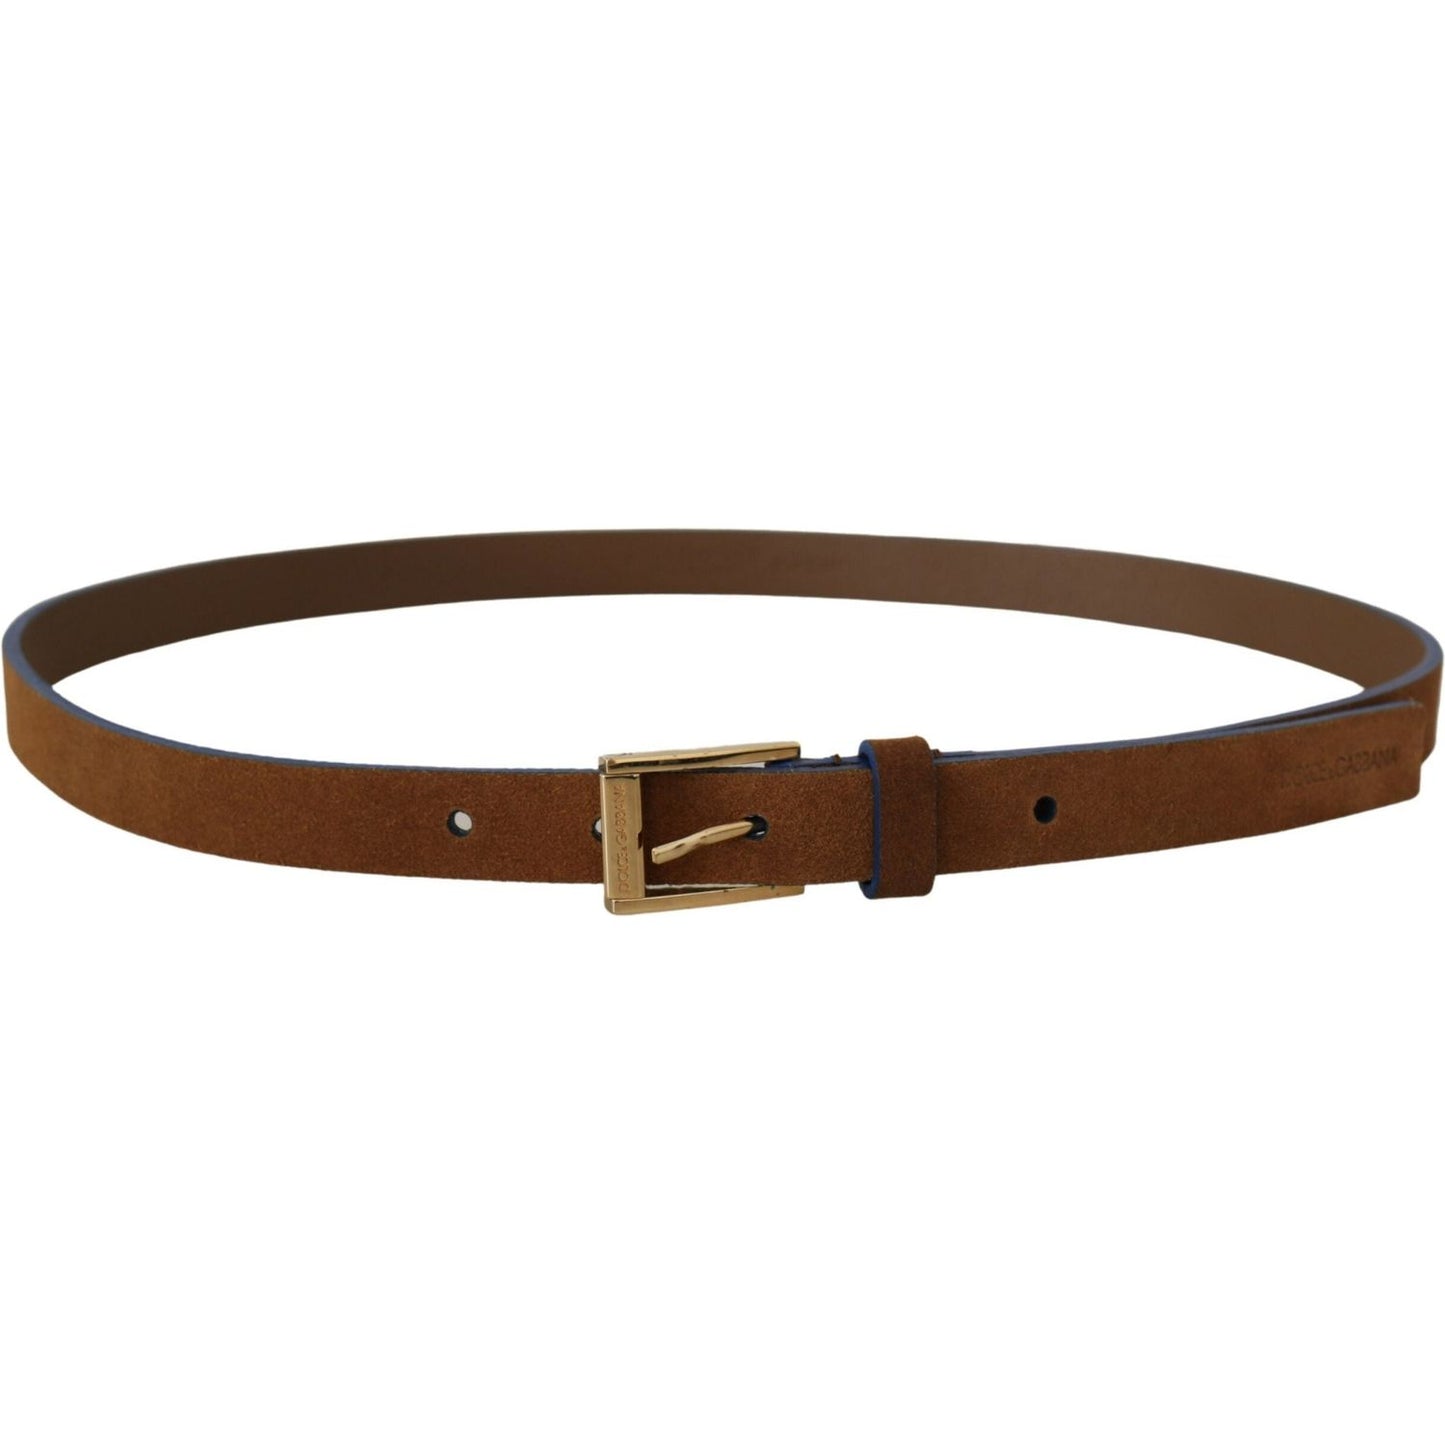 Dolce & Gabbana Elegant Suede Leather Belt with Logo Engraved Buckle dark-brown-blue-leather-gold-metal-buckle-belt